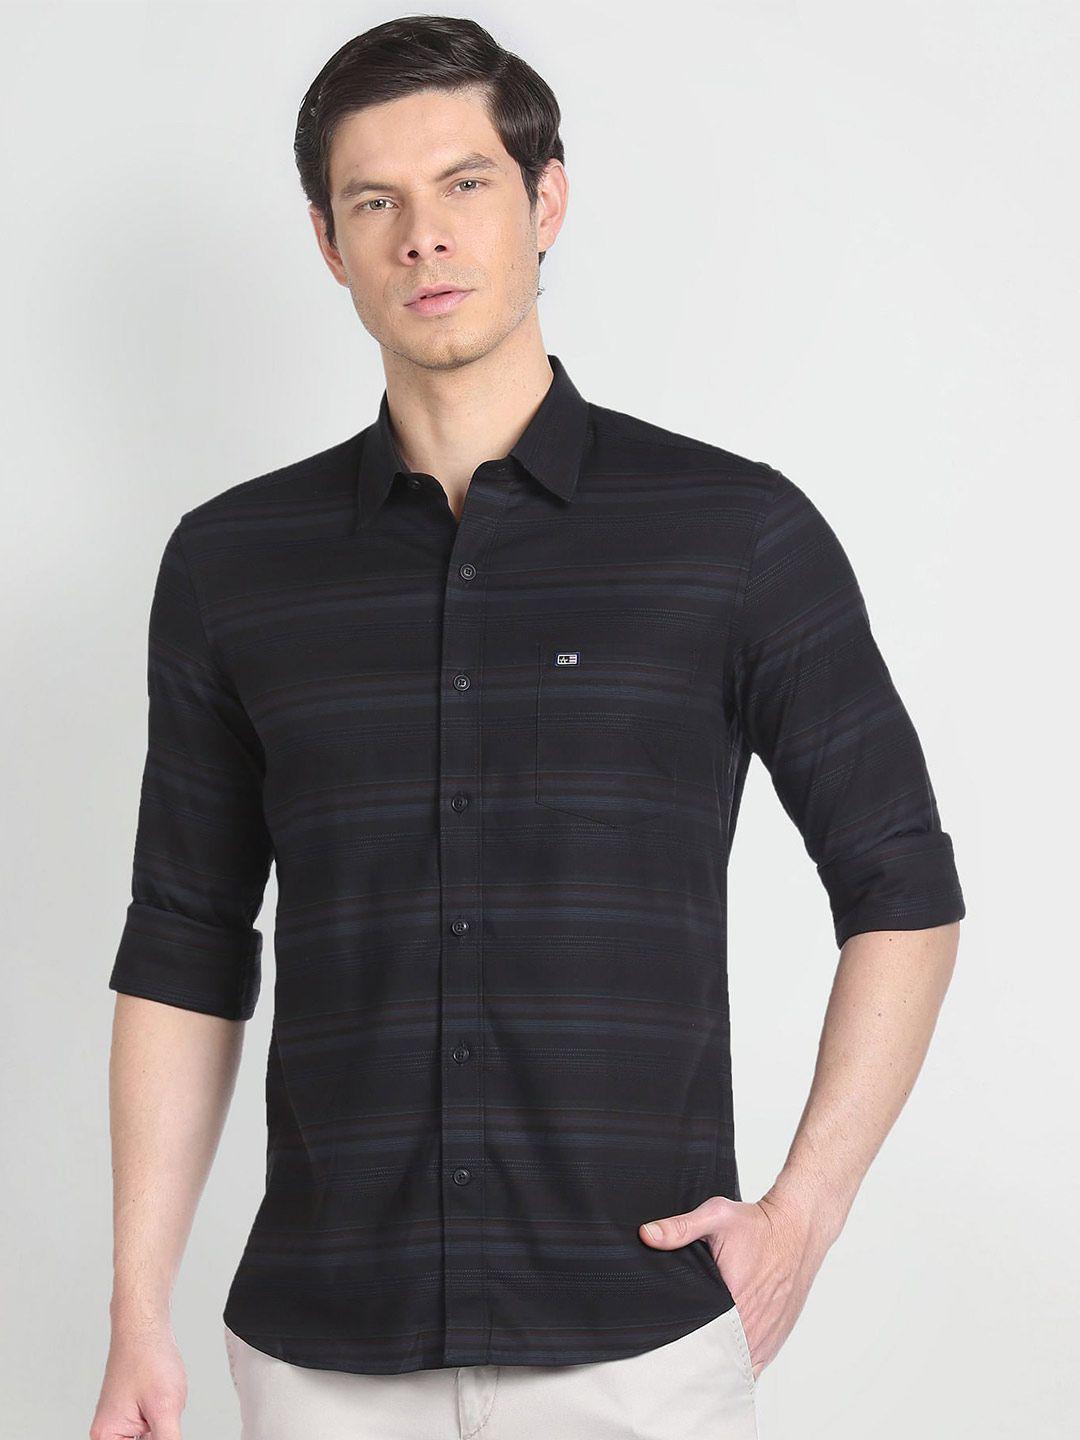 arrow sport spread collar slim fit horizontal striped casual pure cotton shirt